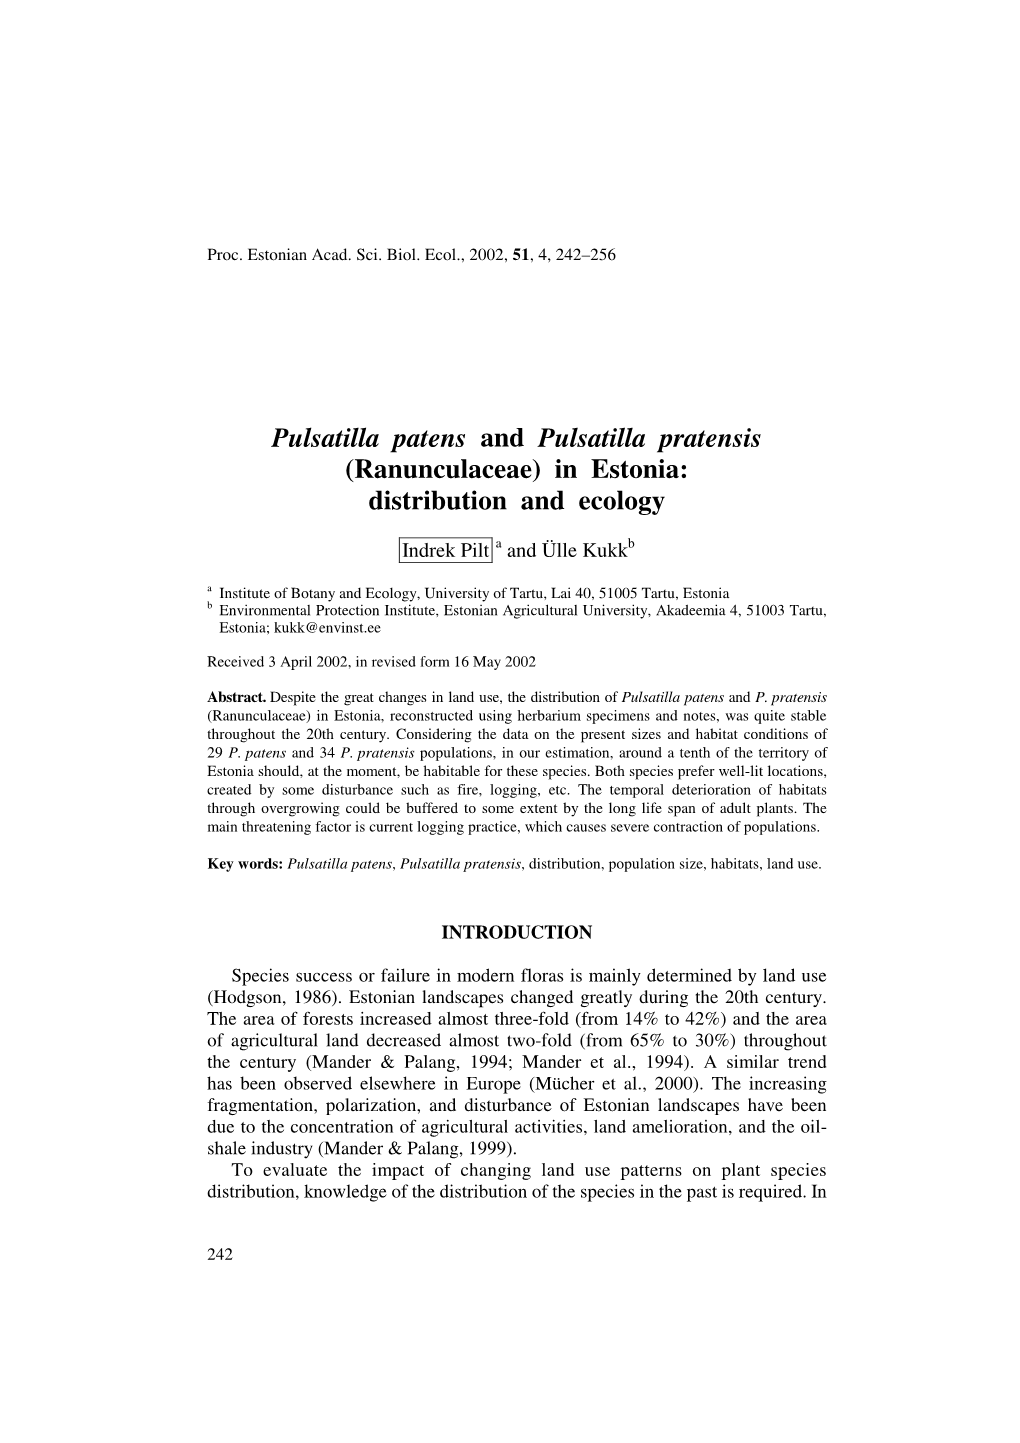 Pulsatilla Patens and Pulsatilla Pratensis (Ranunculaceae) in Estonia: Distribution and Ecology